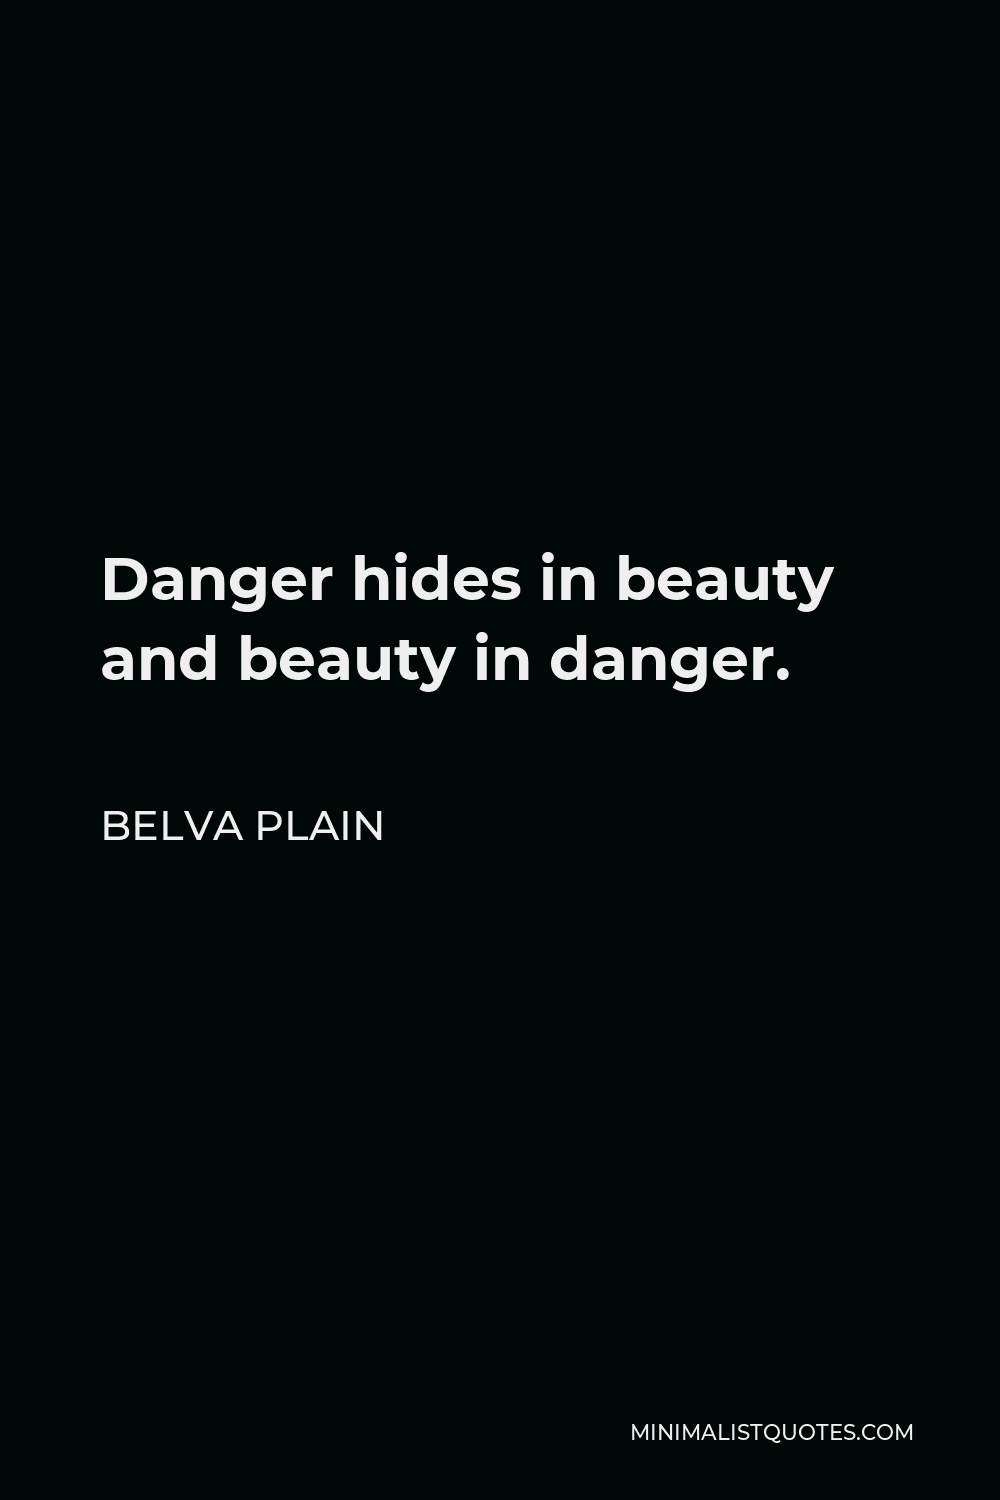 Belva Plain Quote - Danger hides in beauty and beauty in danger.